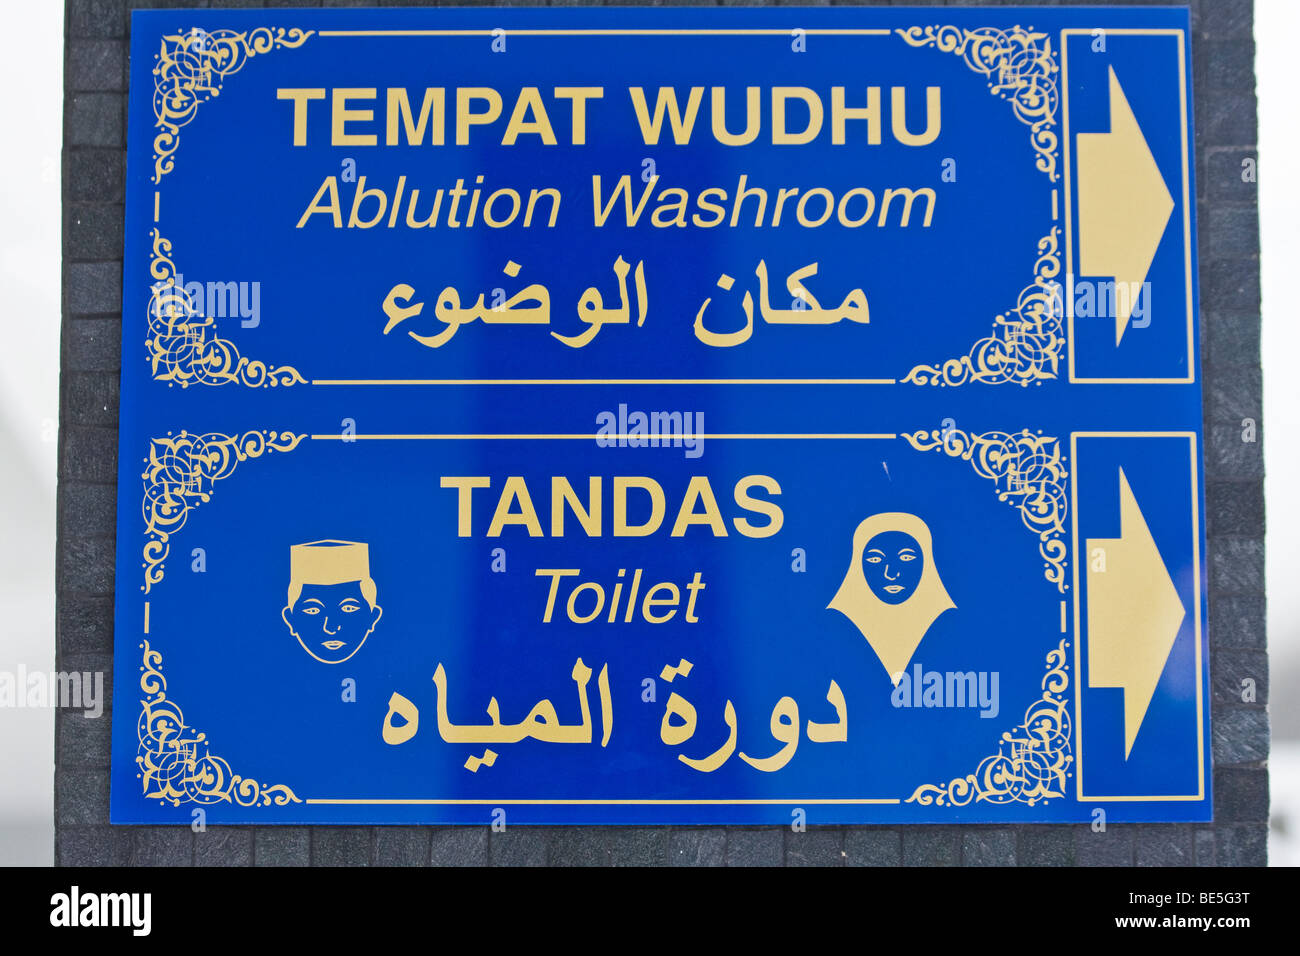 Sign for toilet and ablution washroom inside the National Mosque (Masjid Negara), Kuala Lumpur Stock Photo